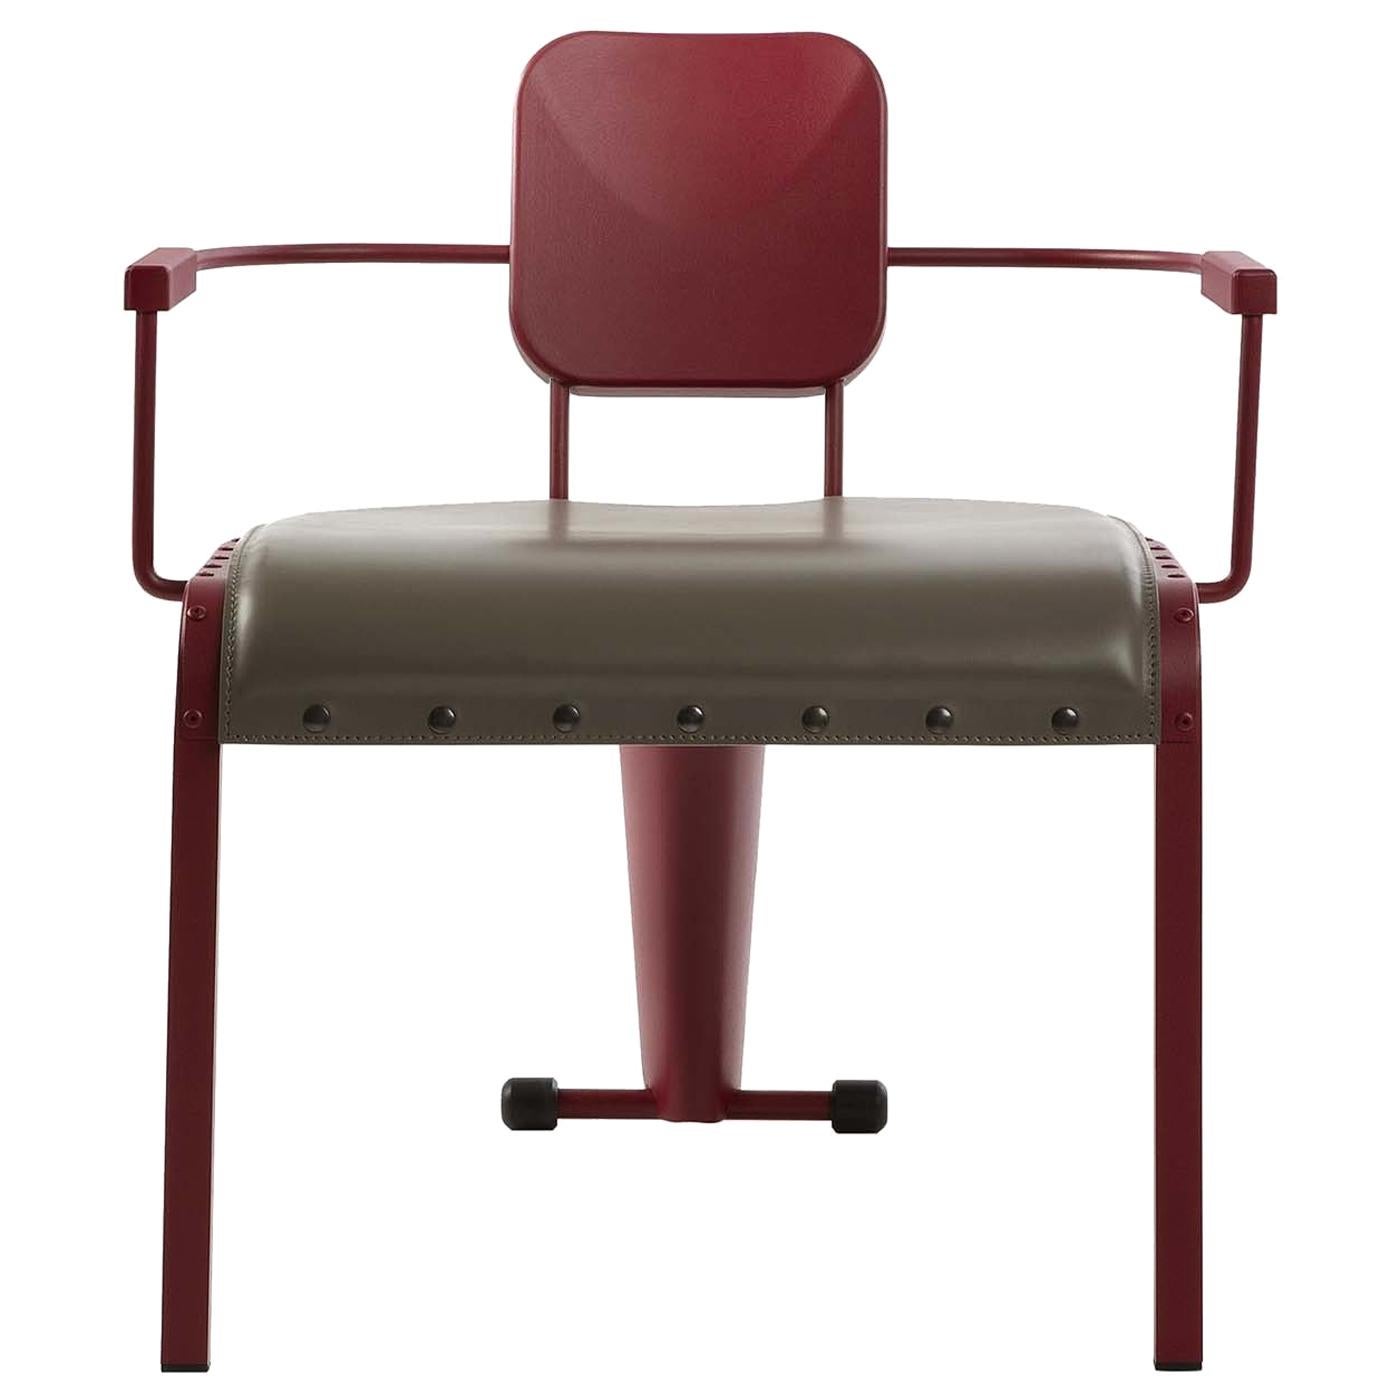 Rock Red Lounge Chair mit grauem ledersitz by Marc Sadler im Angebot